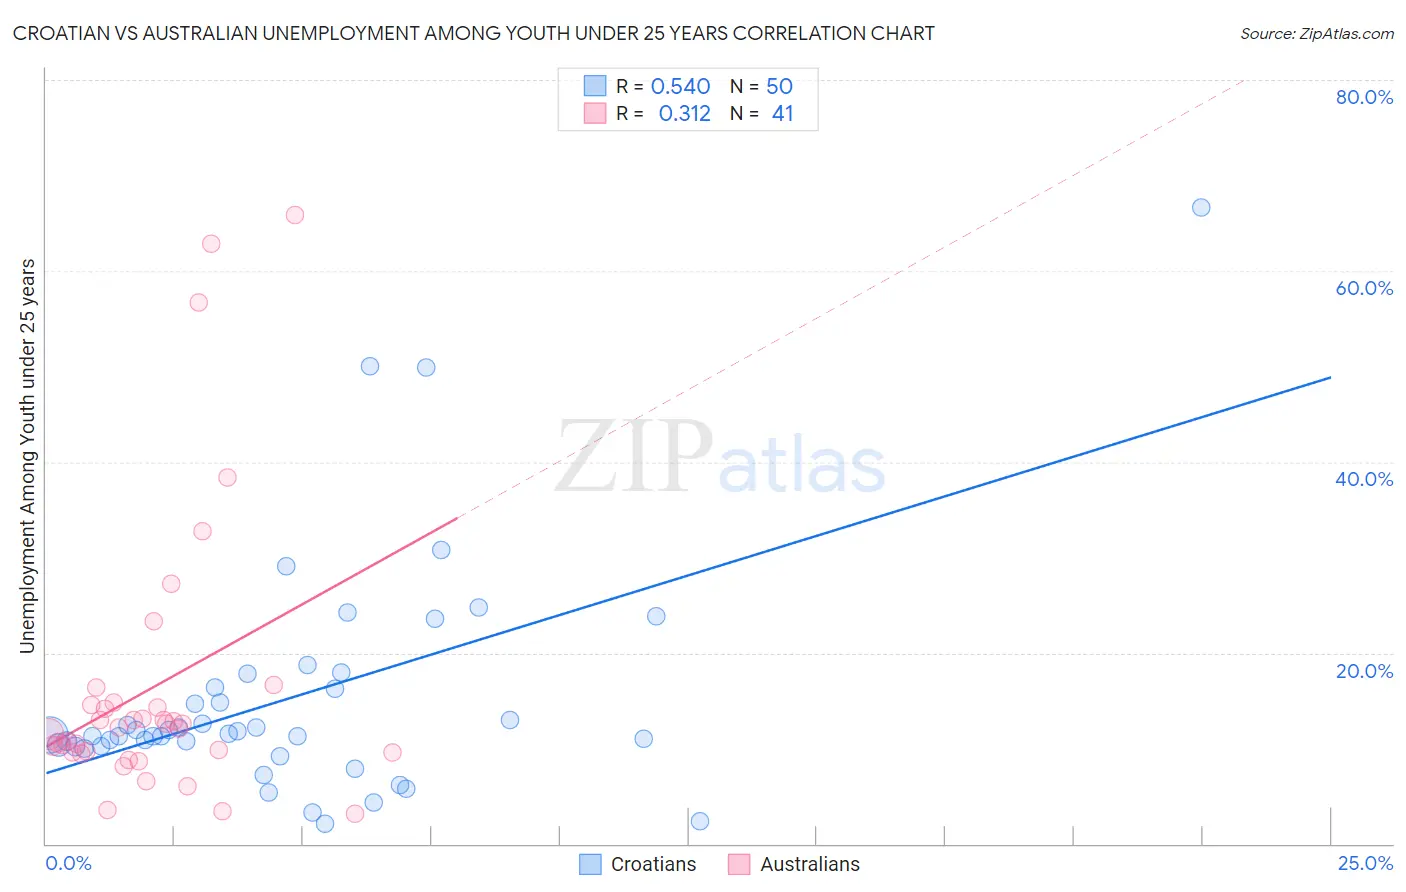 Croatian vs Australian Unemployment Among Youth under 25 years